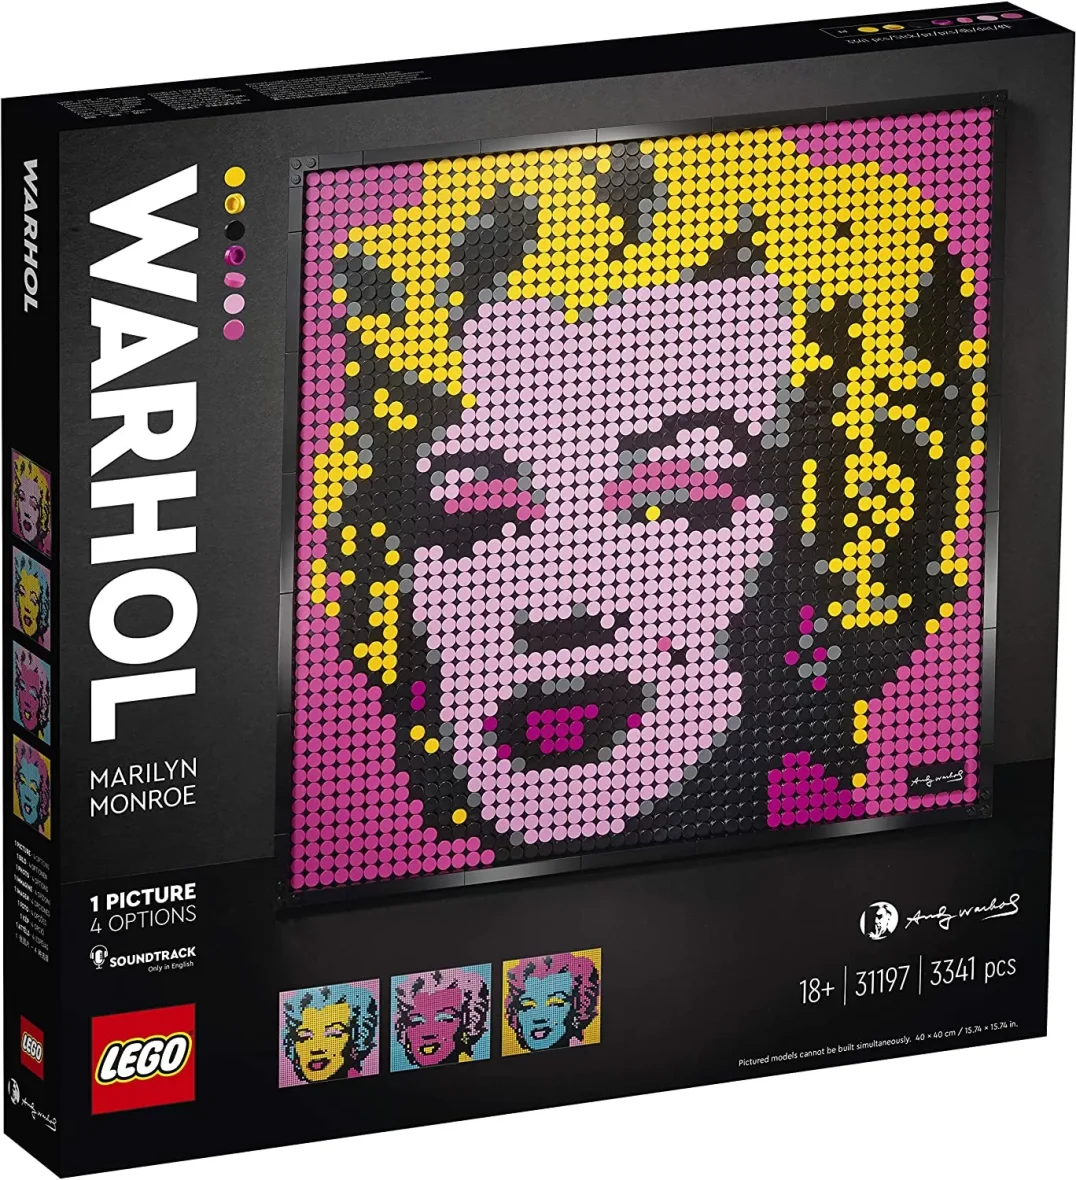 LEGO ART 2020 ANDY WARHOL'S MARILYN MONROE 31197